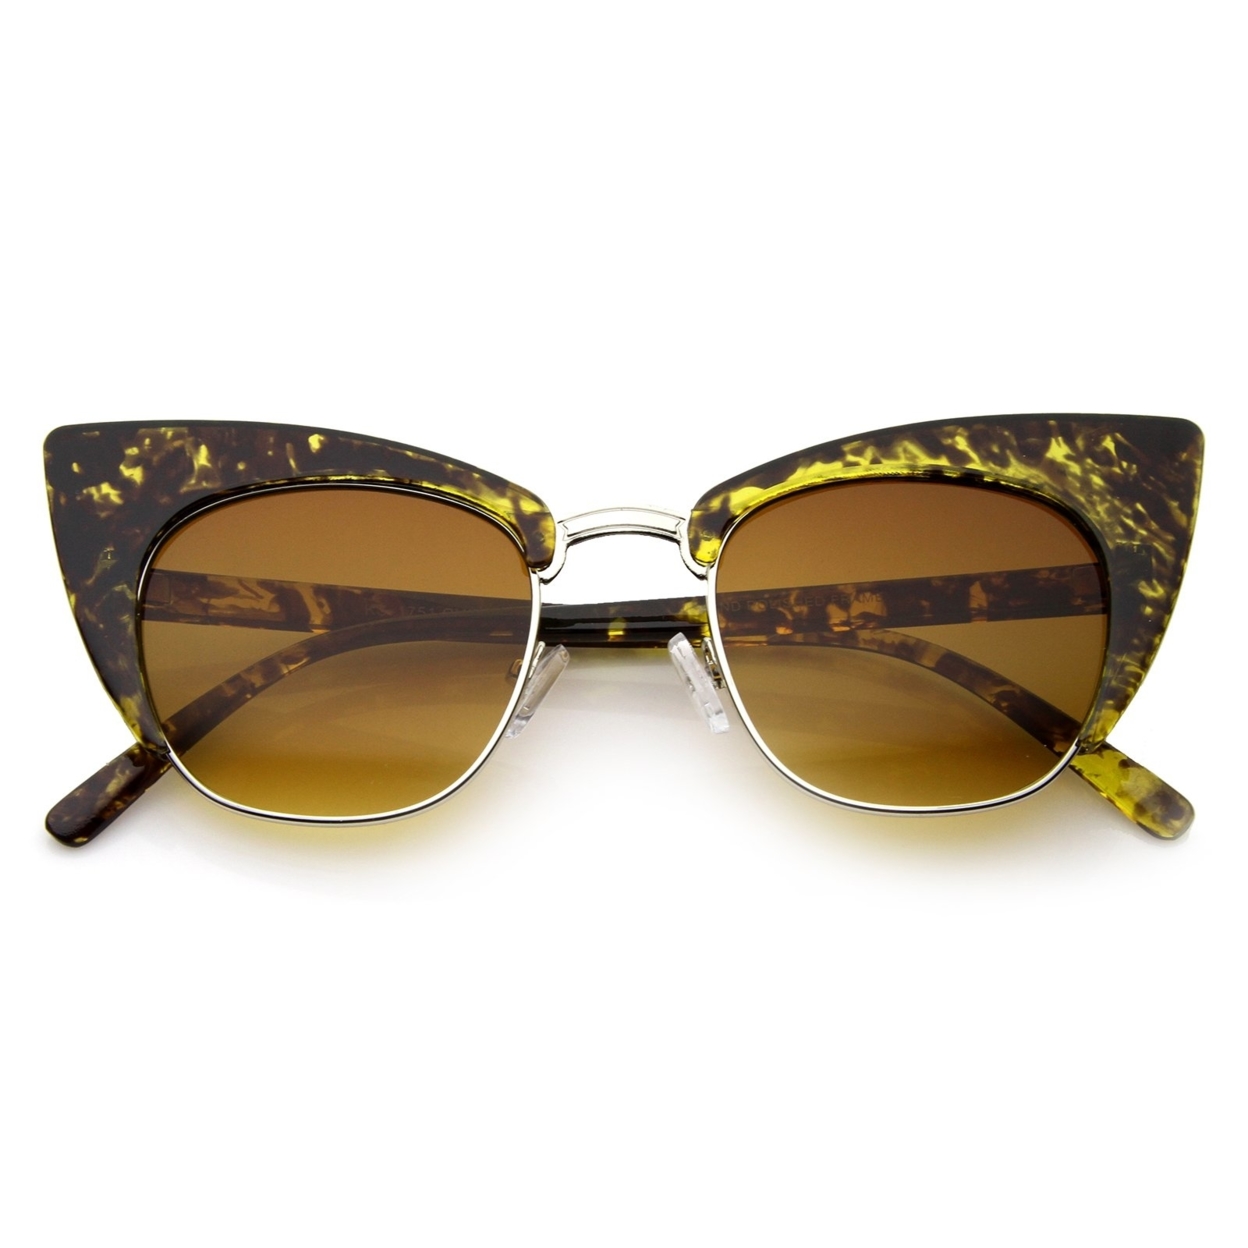 Women's High Fashion Half Frame Bold Square Cat Eye Sunglasses 50mm - Yellow-Tortoise / Amber